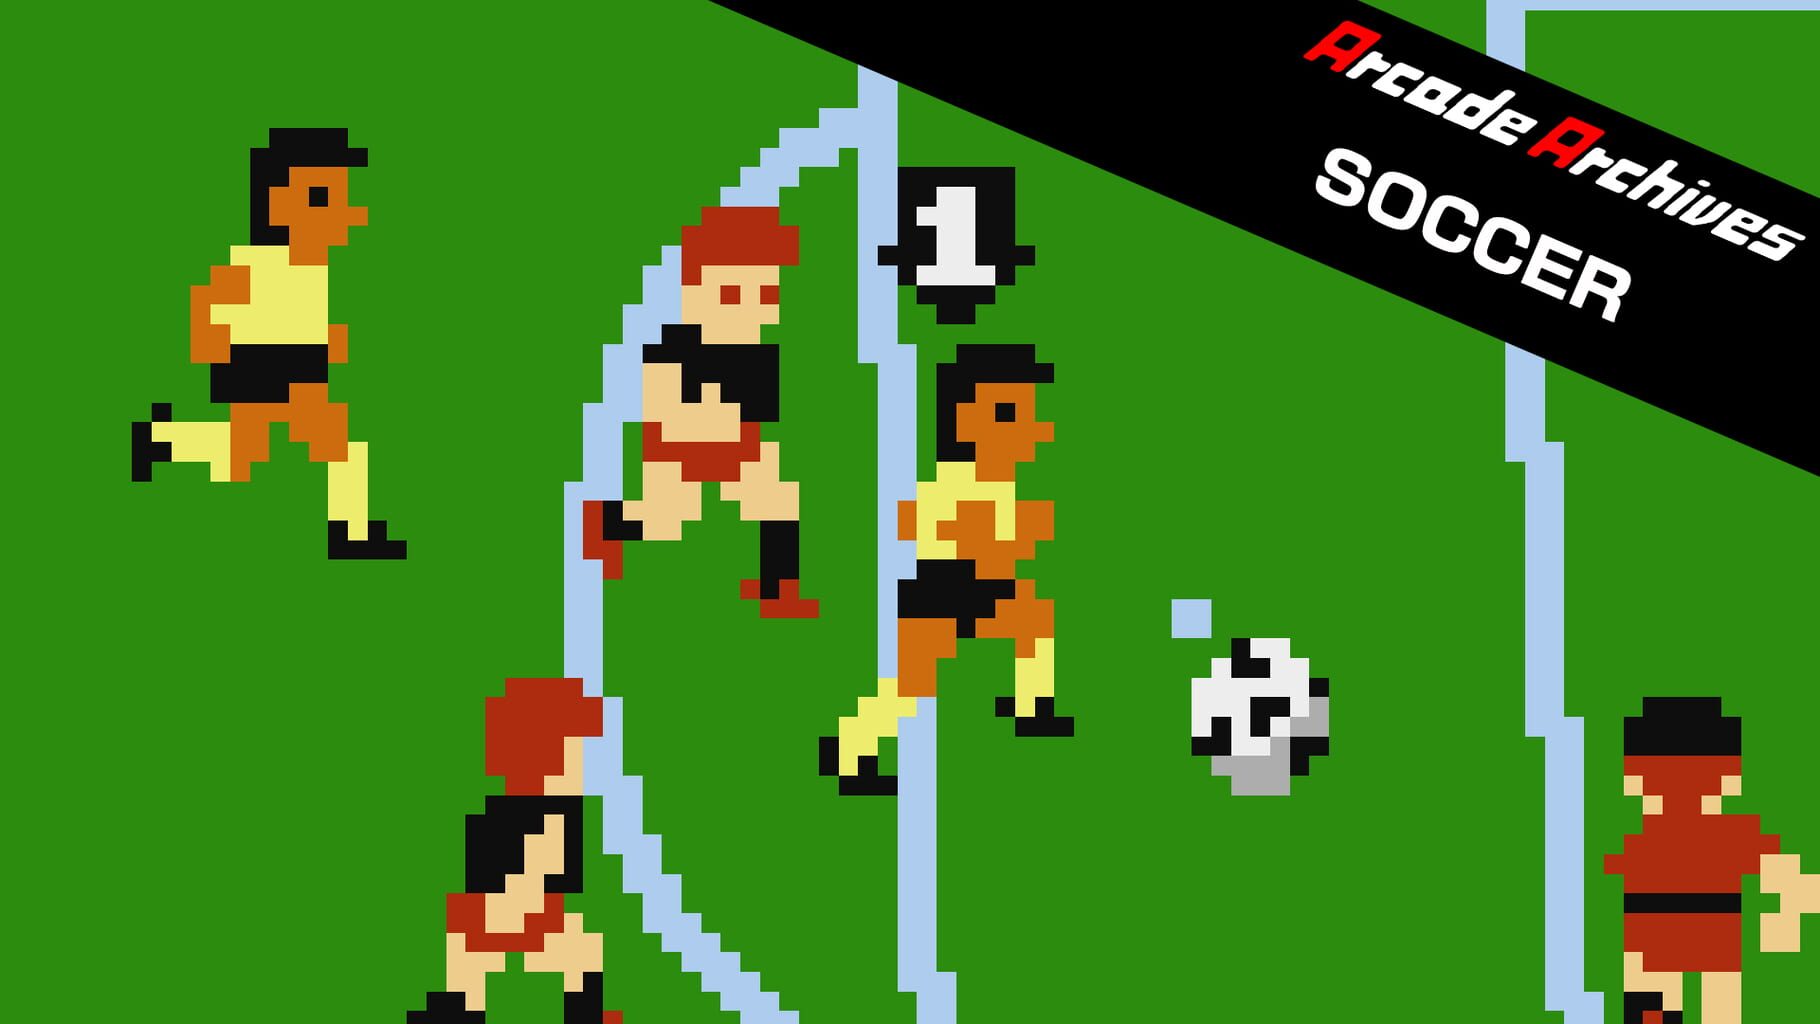 Arcade Archives: Soccer artwork